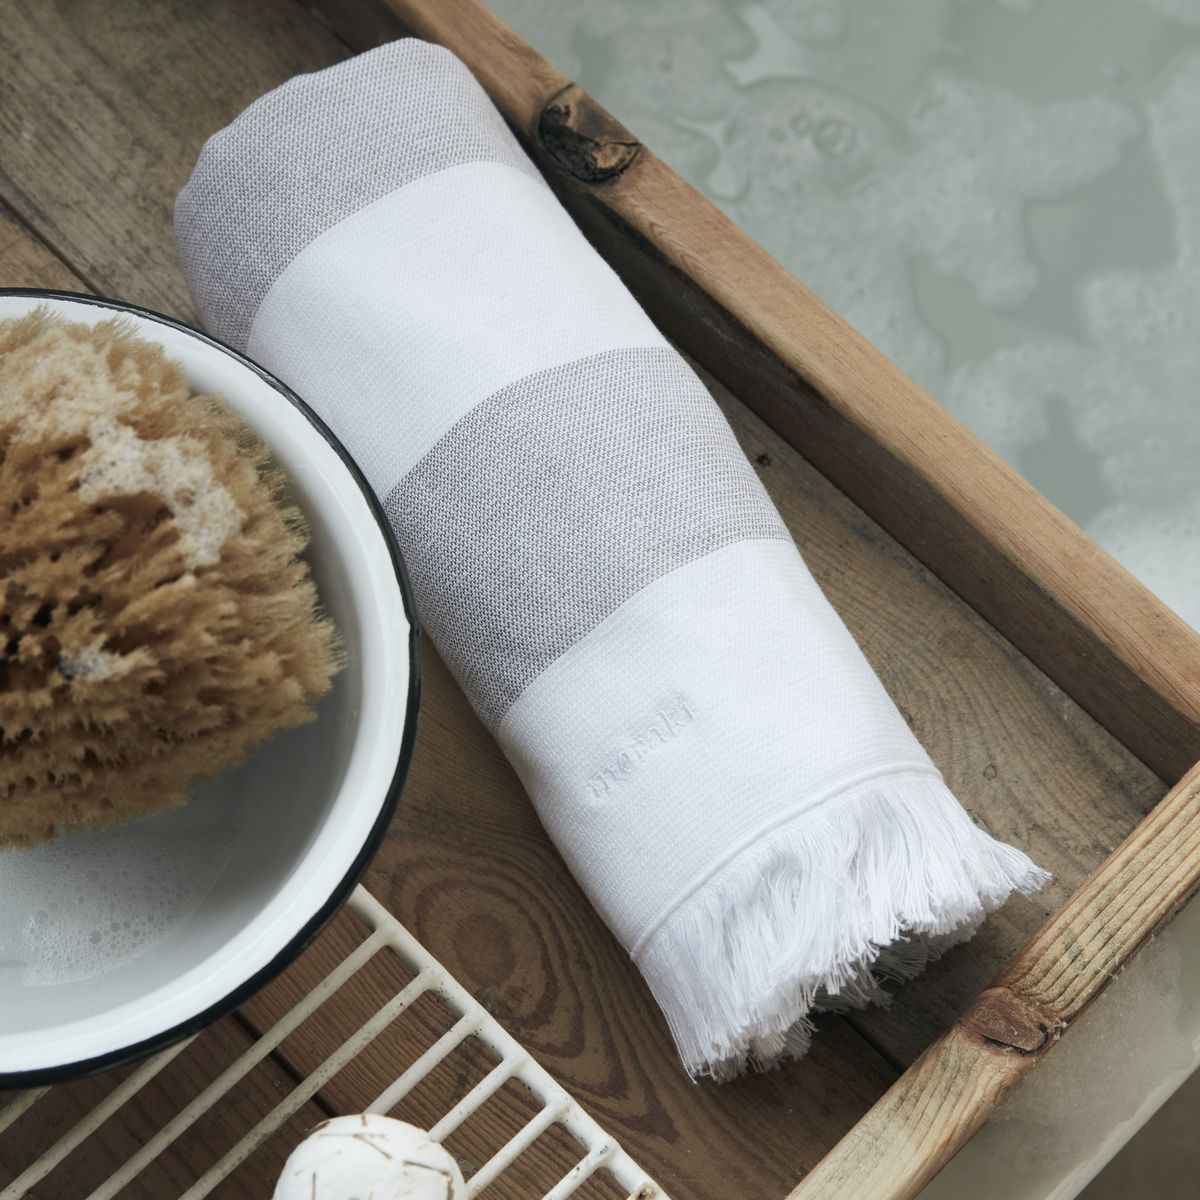 Håndklæde, Barbarum, Hvid og brune strib 50x100 cm, 2 stk